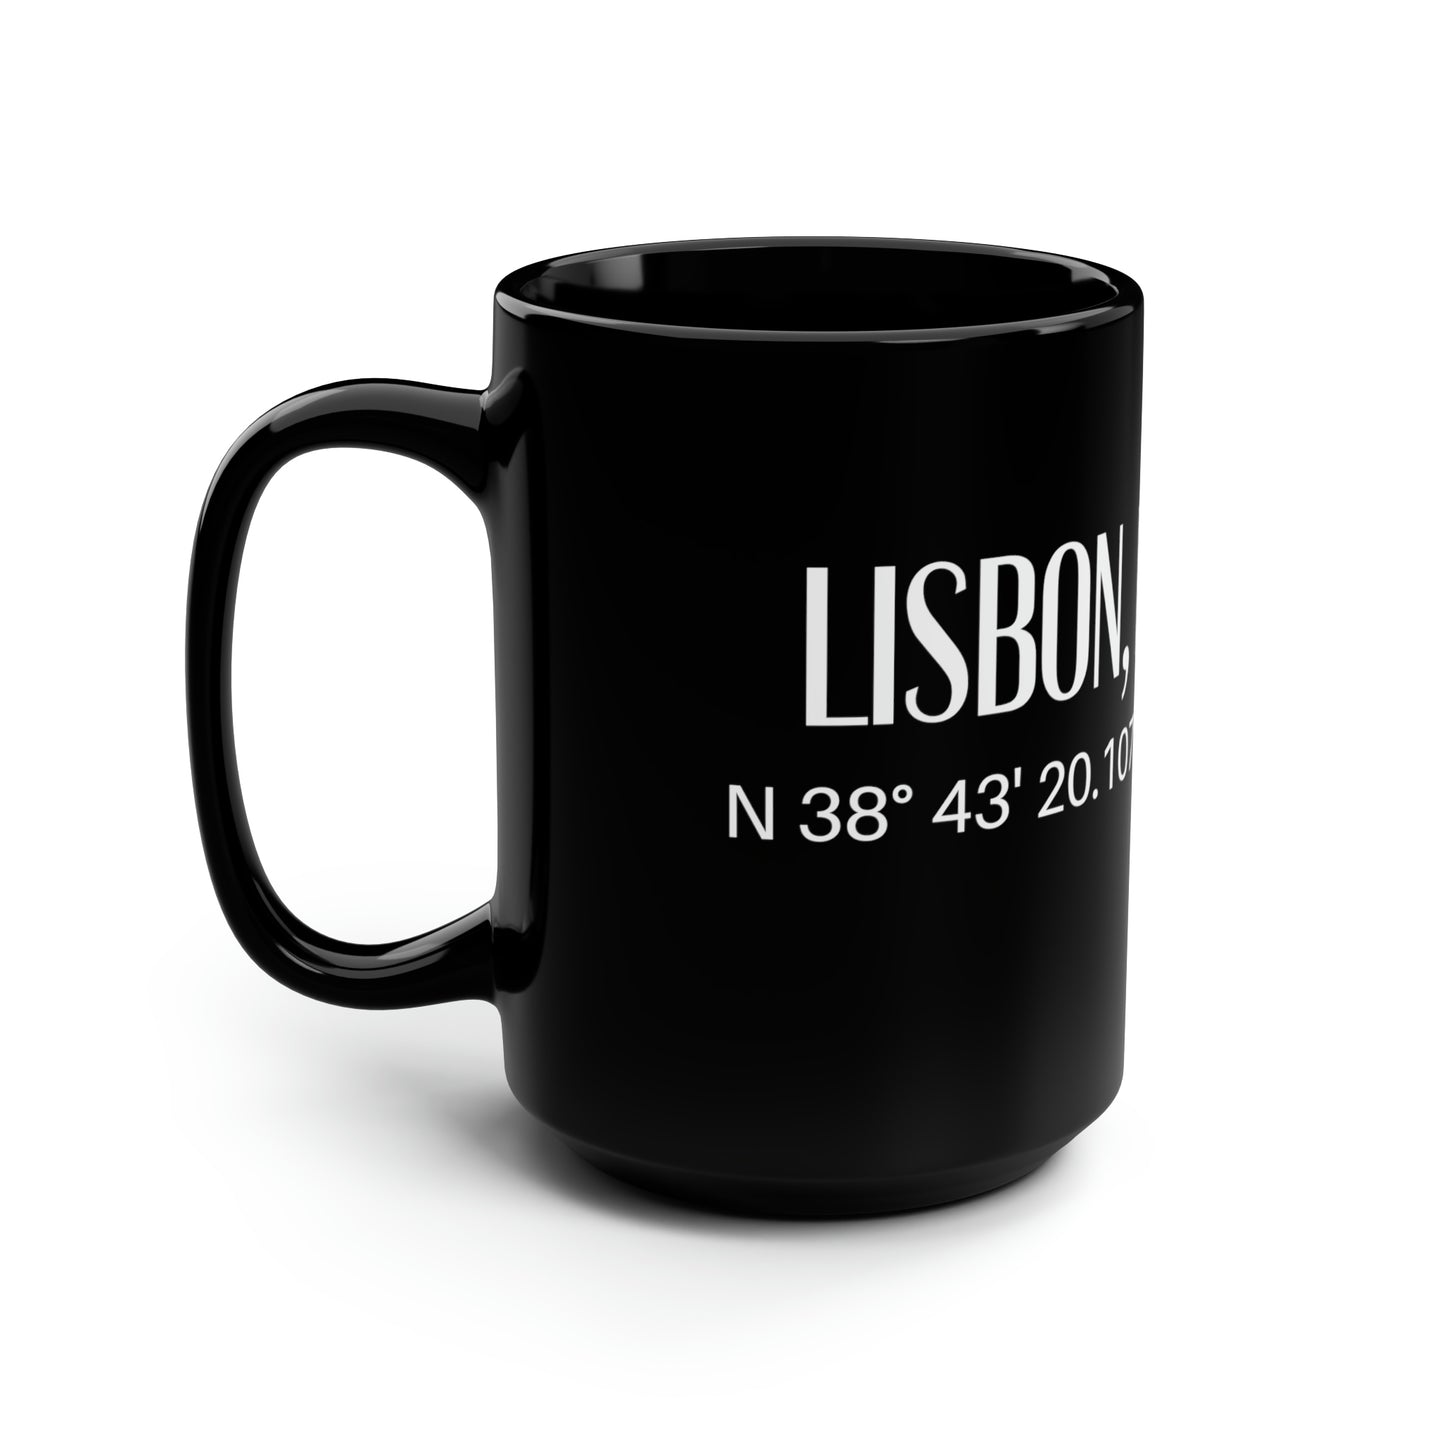 Lisbon, Portugal Mug